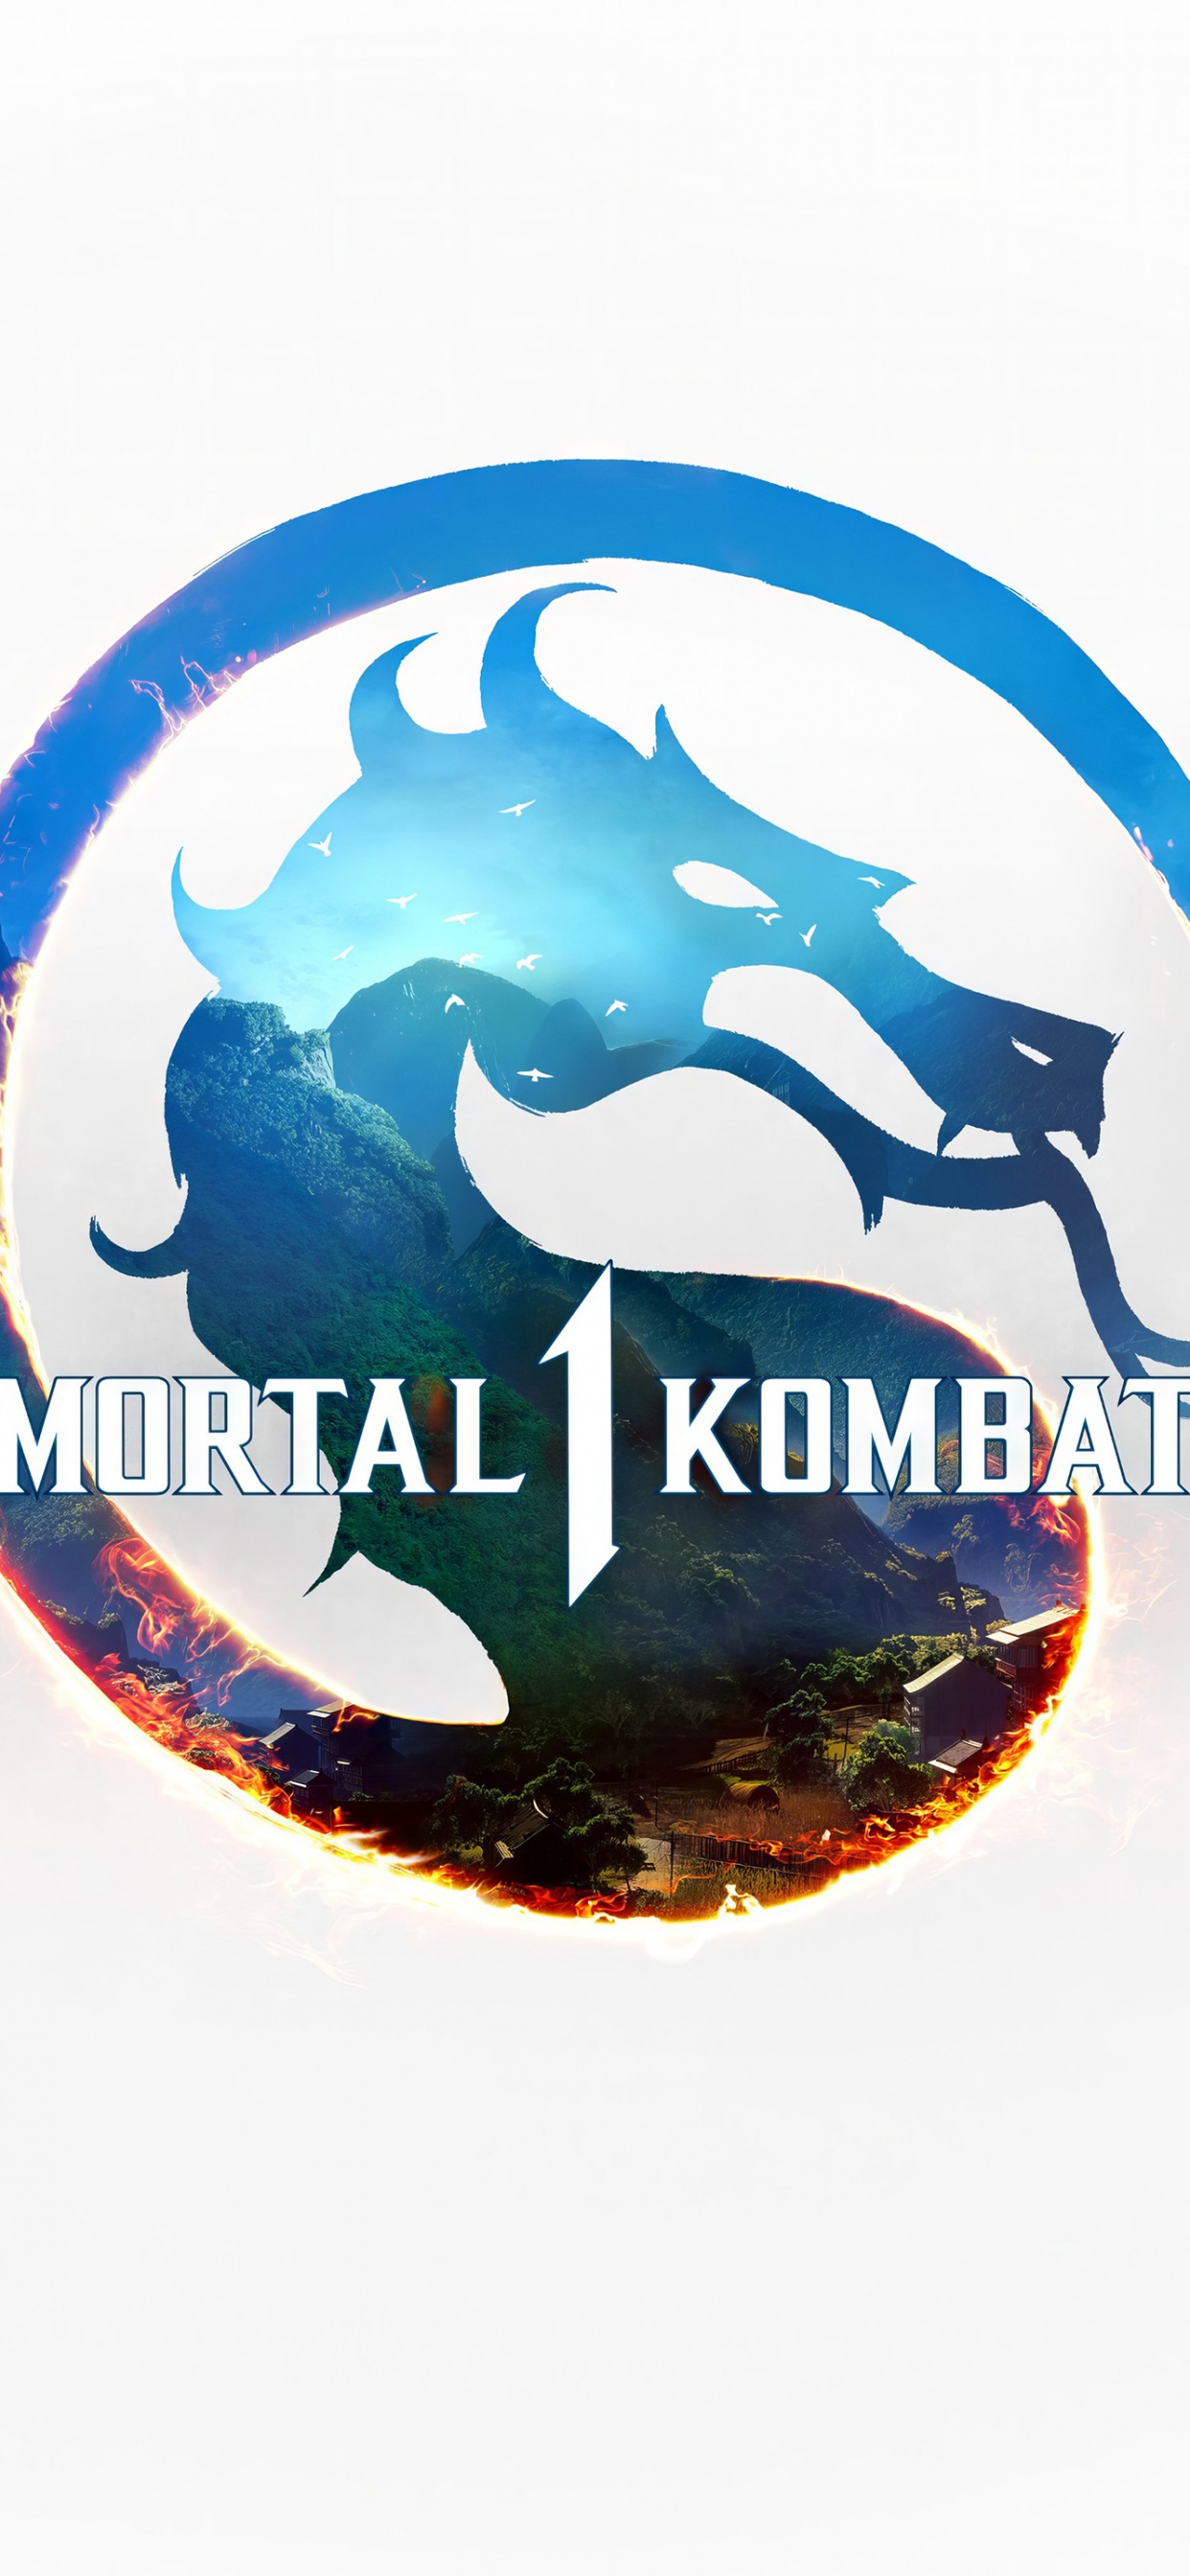 Mortal Kombat Logo iPhone Wallpaper iPhone Wallpaper - iPhone Wallpapers in  2023